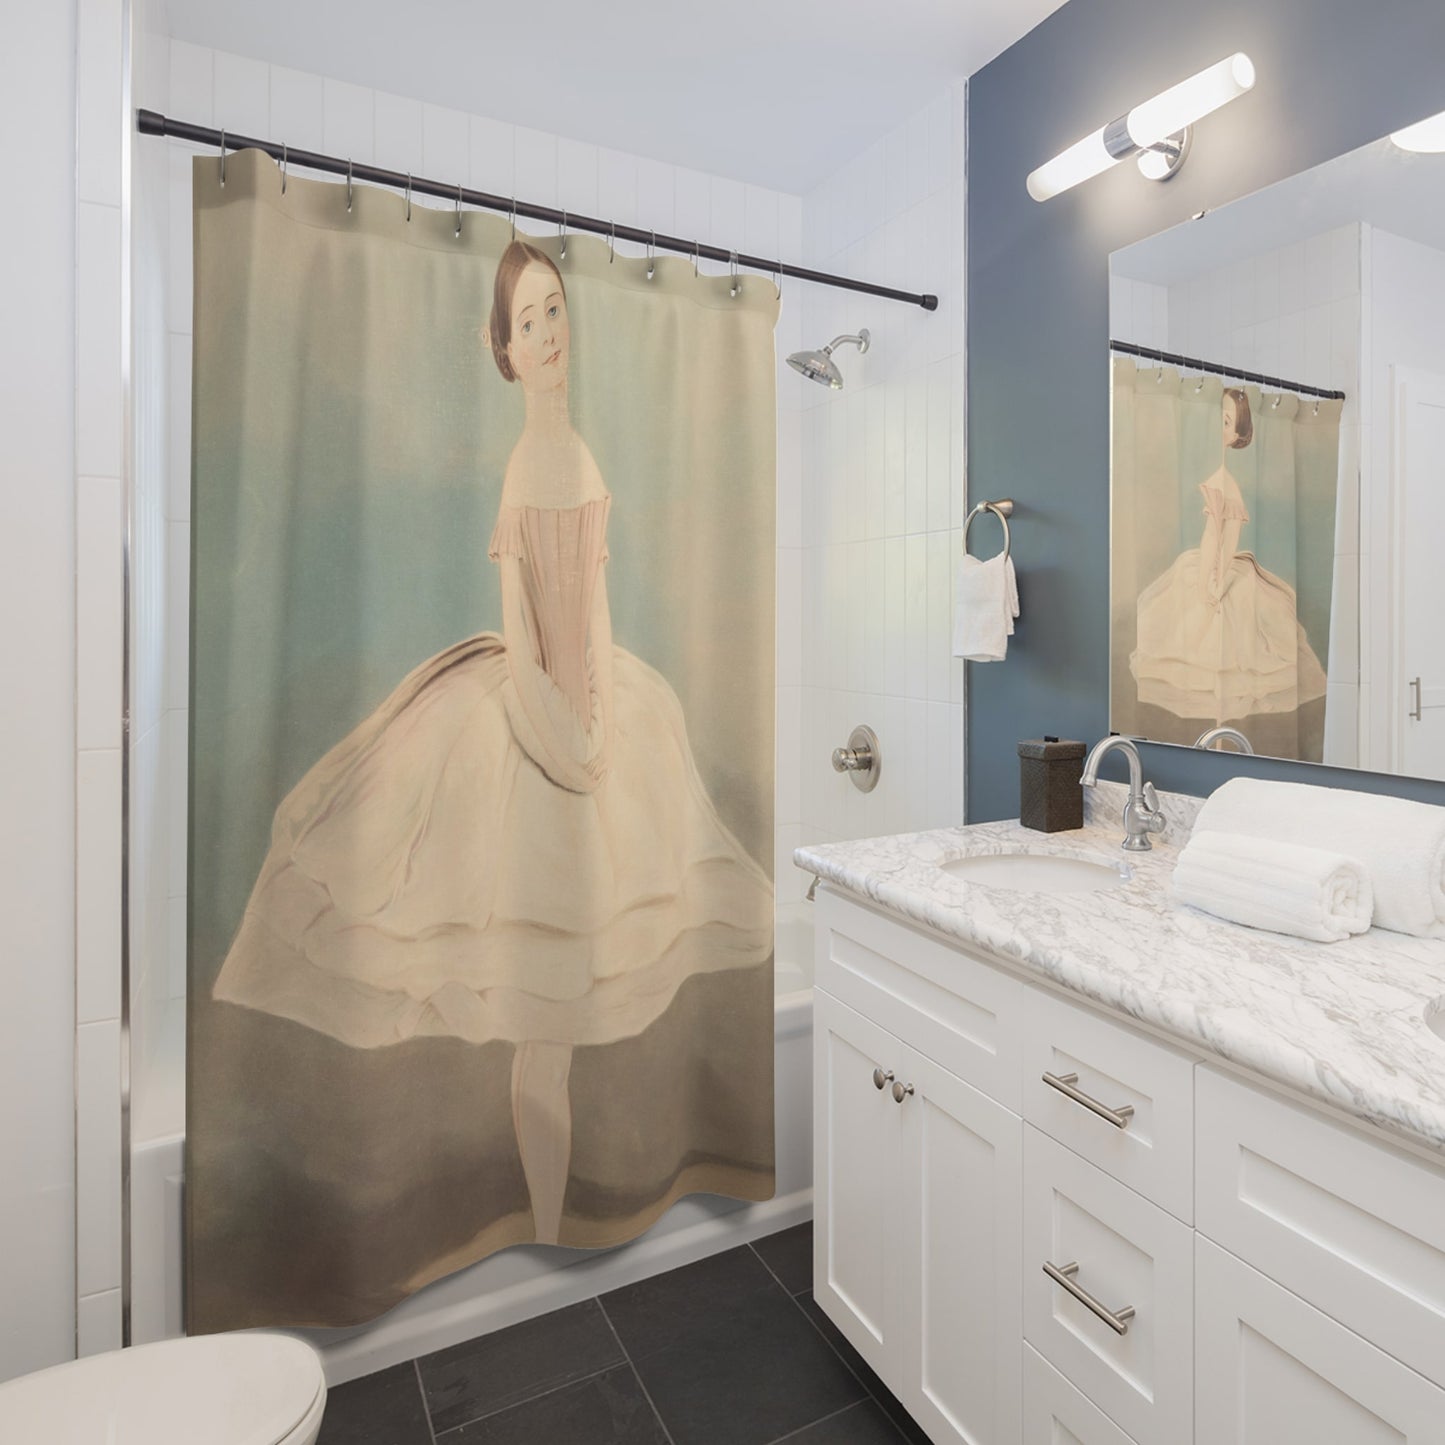 Minimalist Ballet Shower Curtain Best Bathroom Decorating Ideas for Victorian Decor